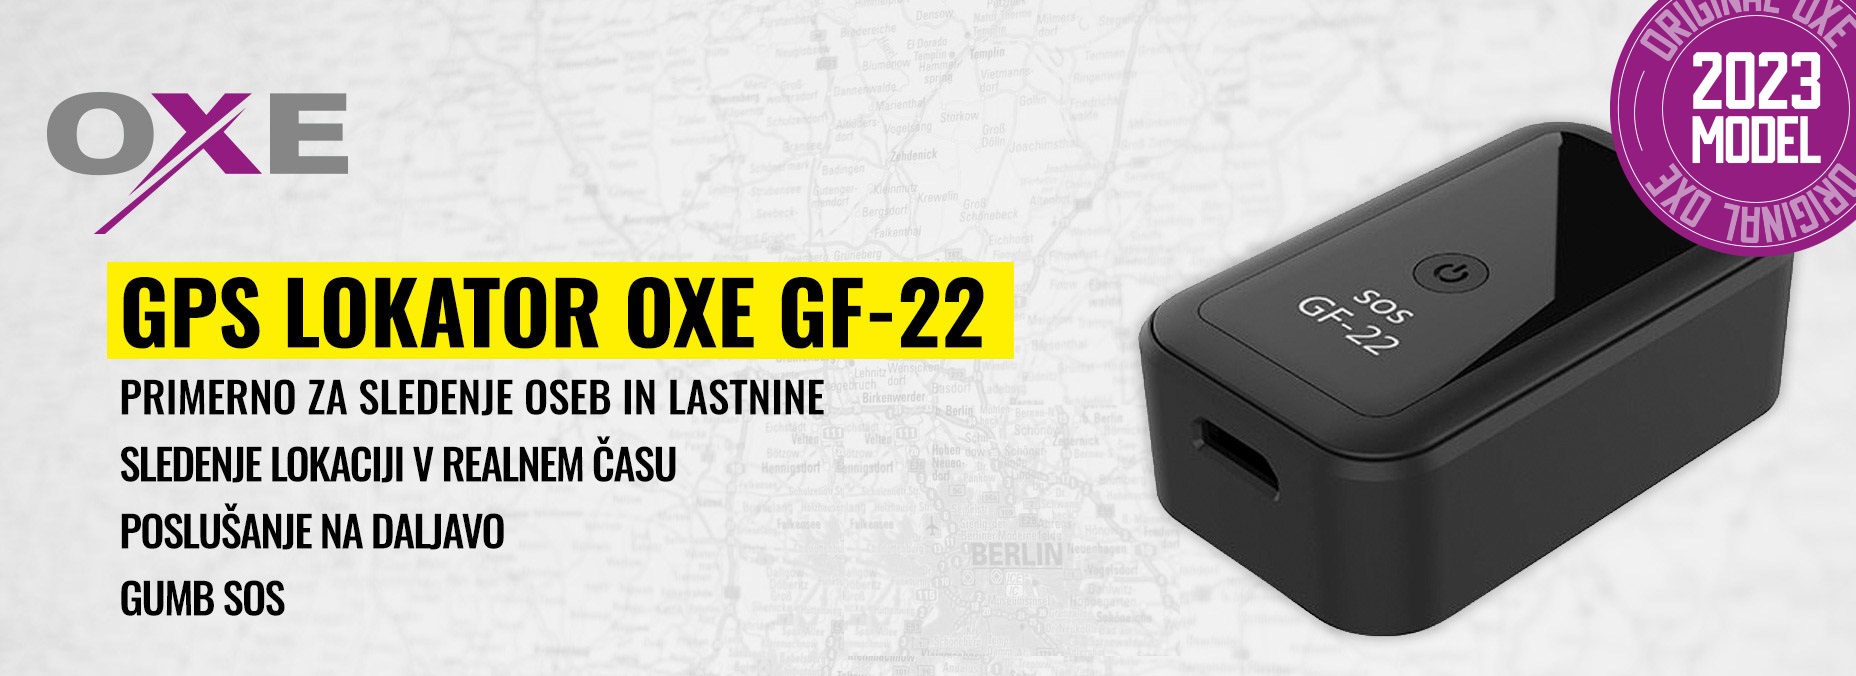 OXE GF-22 - GPS lokator